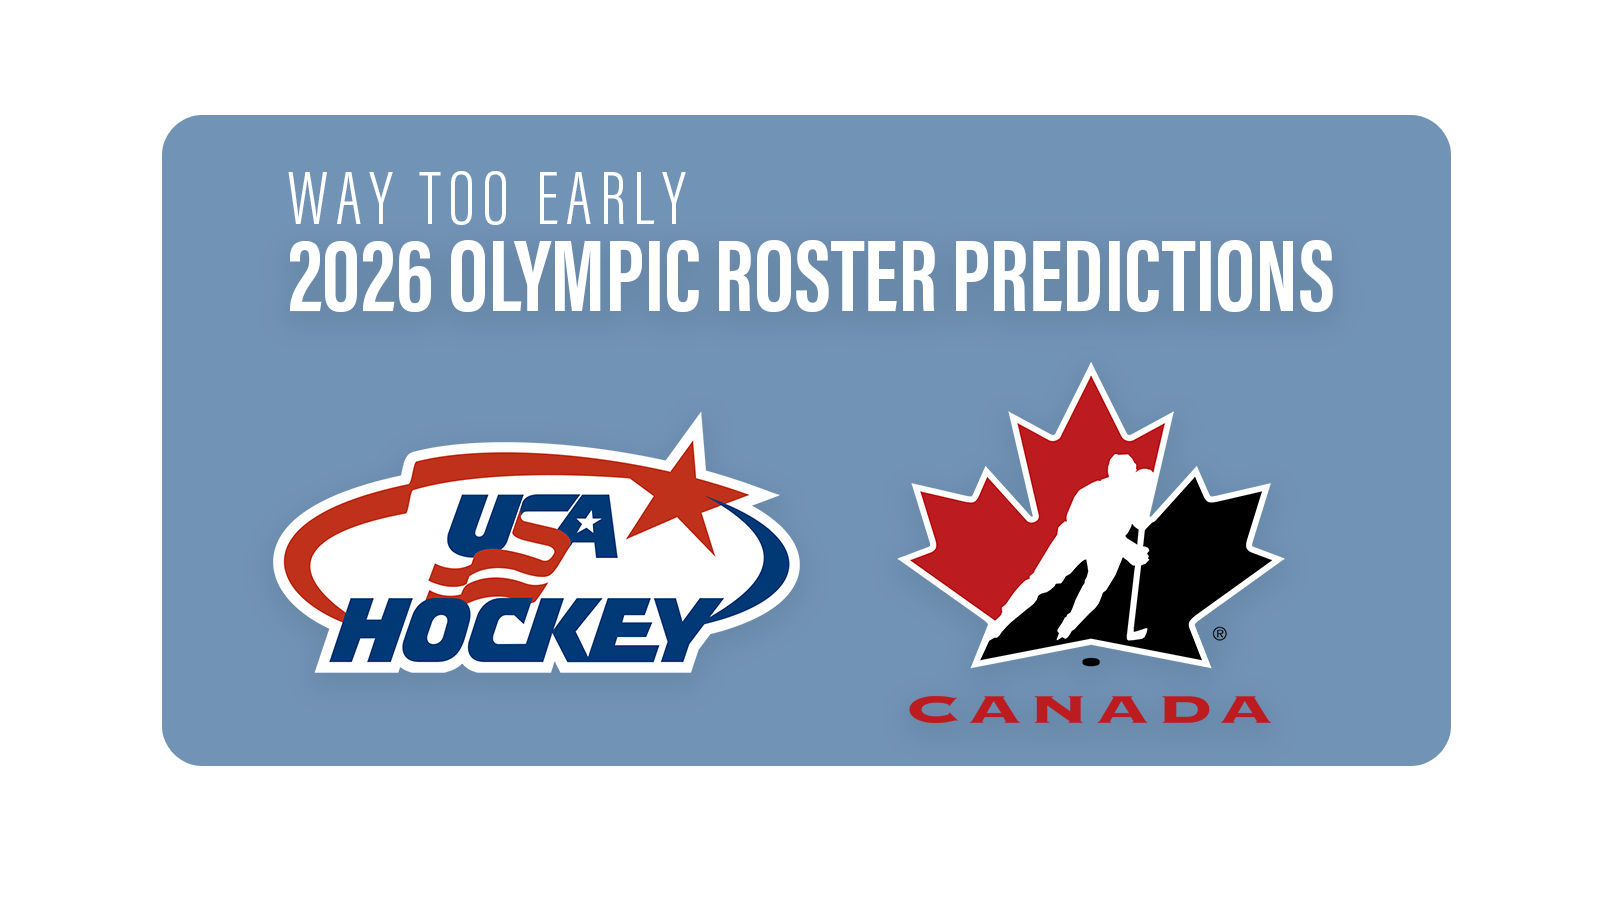 Team Canada 2023 World Junior Pump Up 